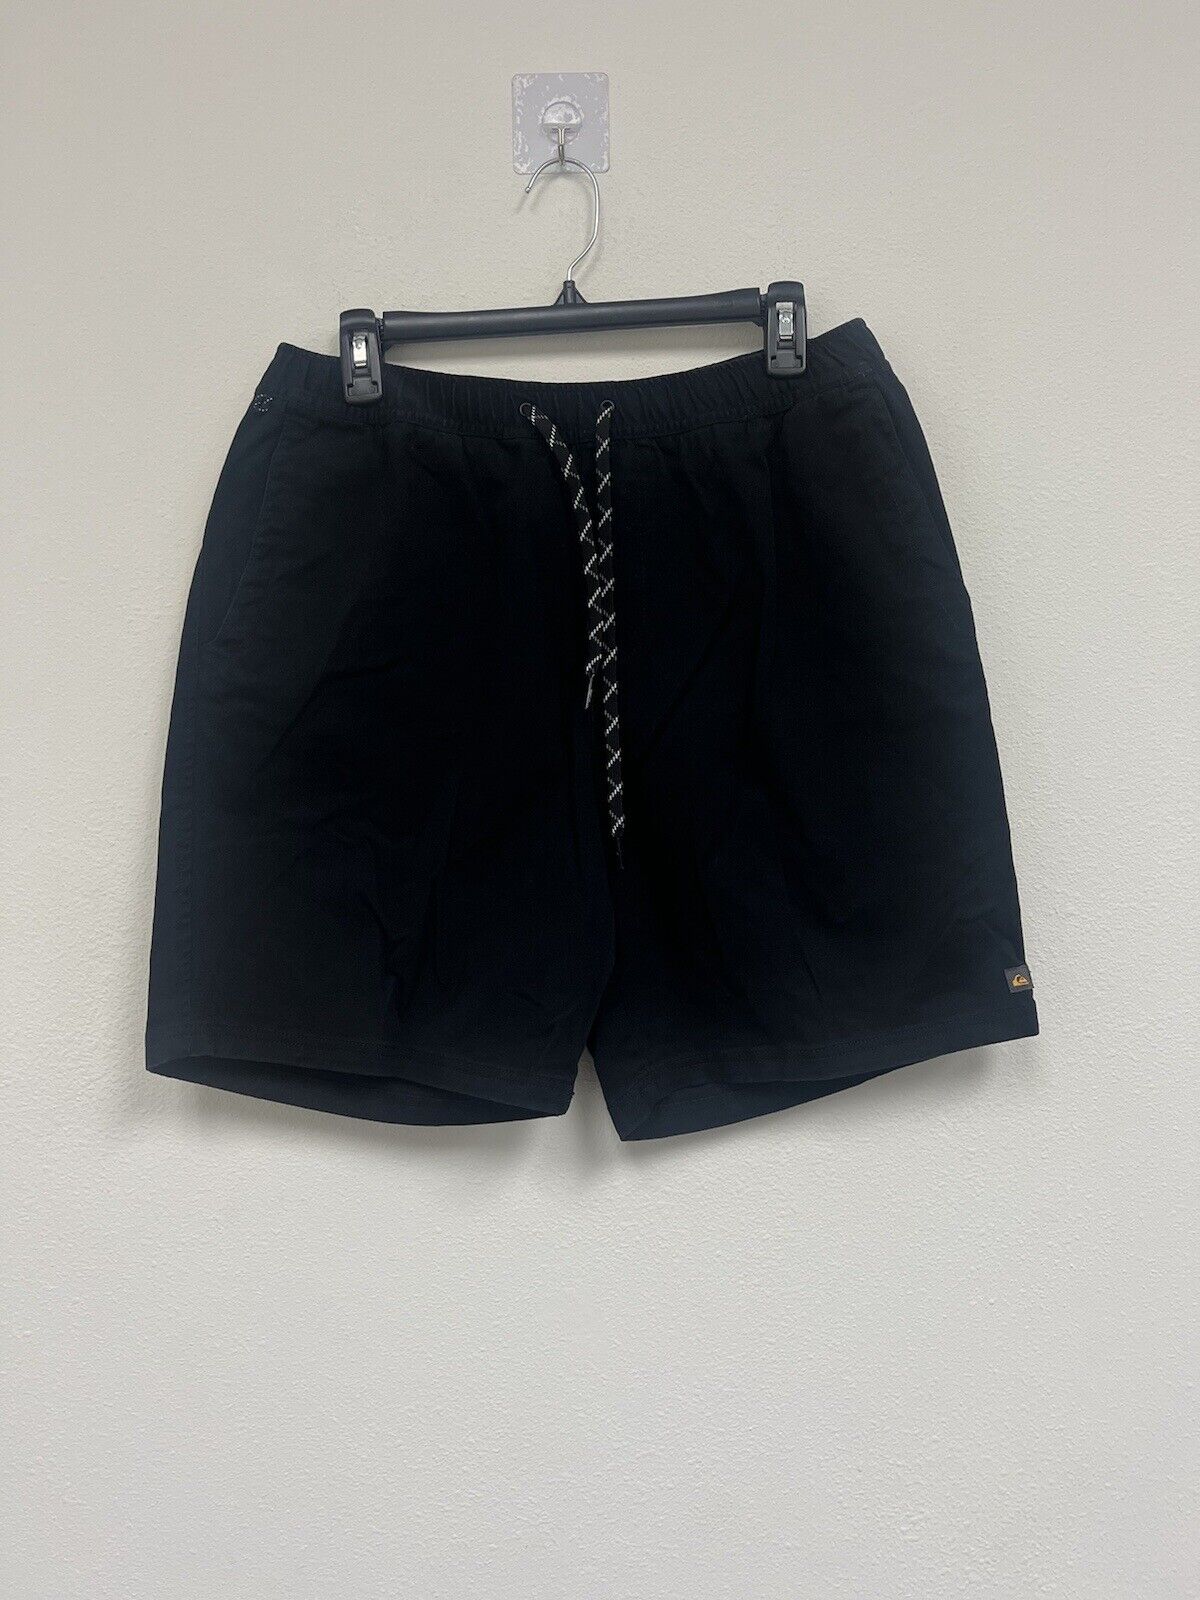 NEW Quiksilver Waterman Men's Cabo Shore Shorts Black Size Large